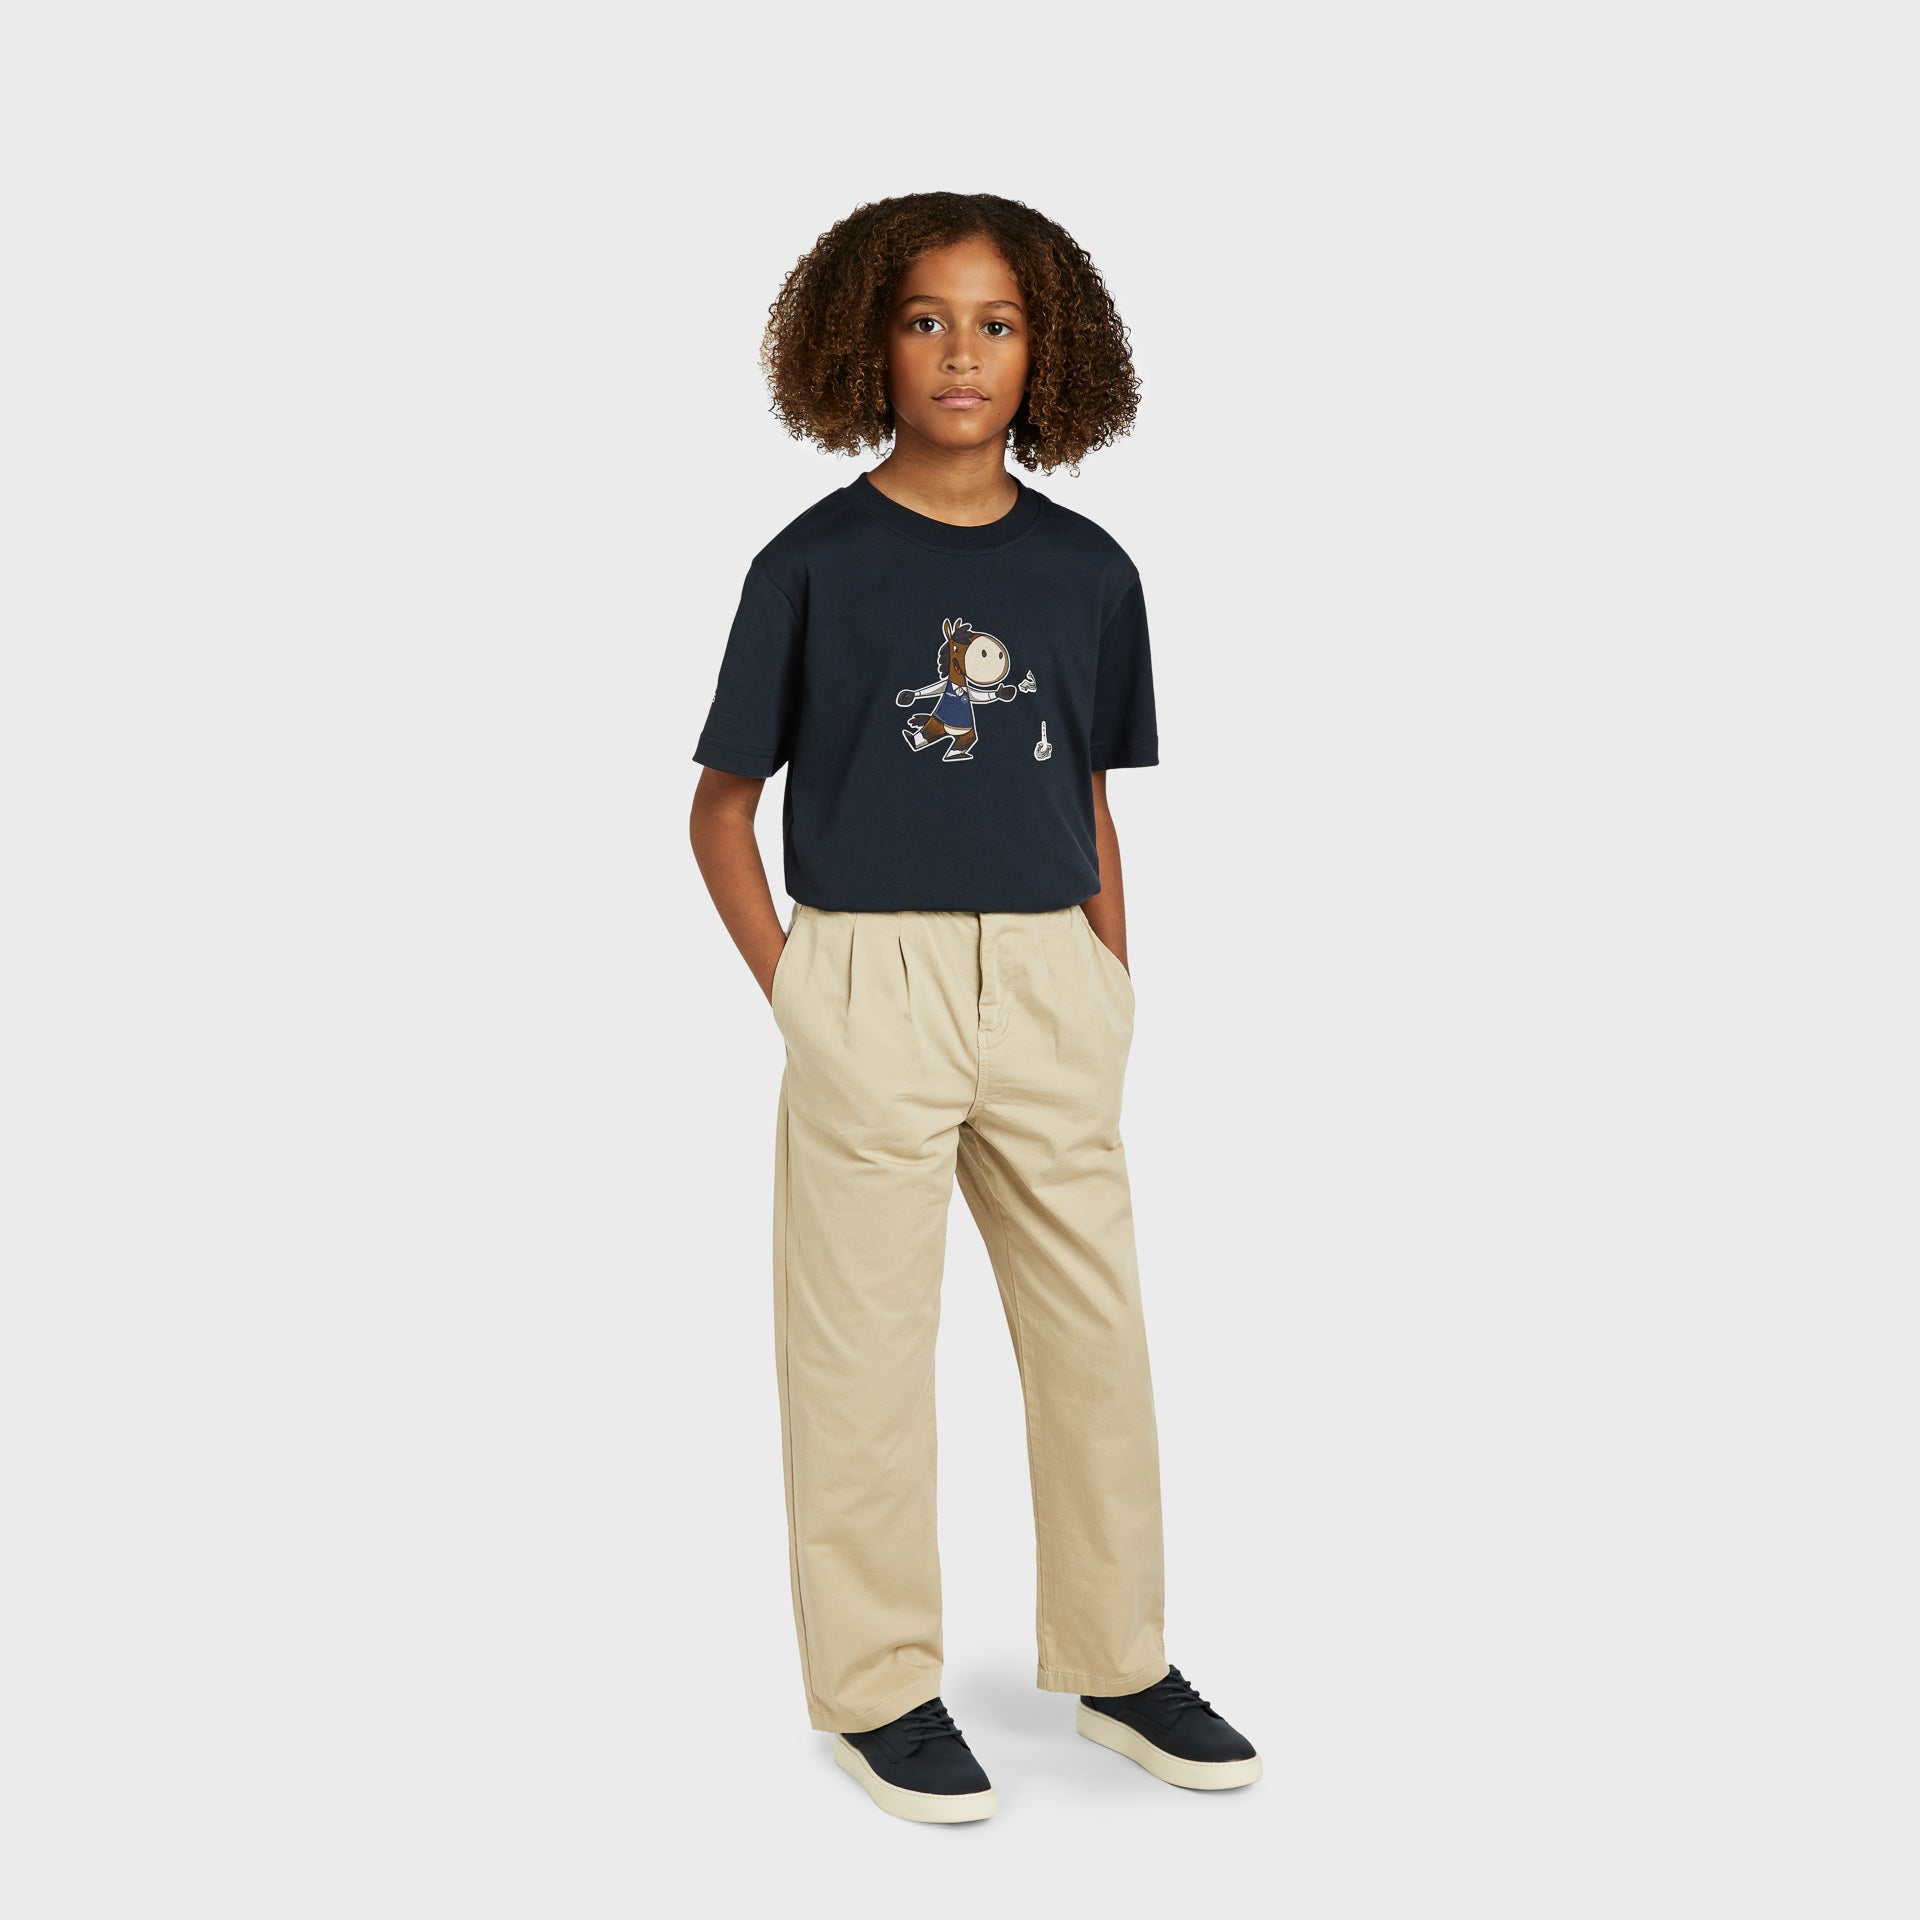 LGCT Sammy #1 Kids T-Shirt - Navy Blue